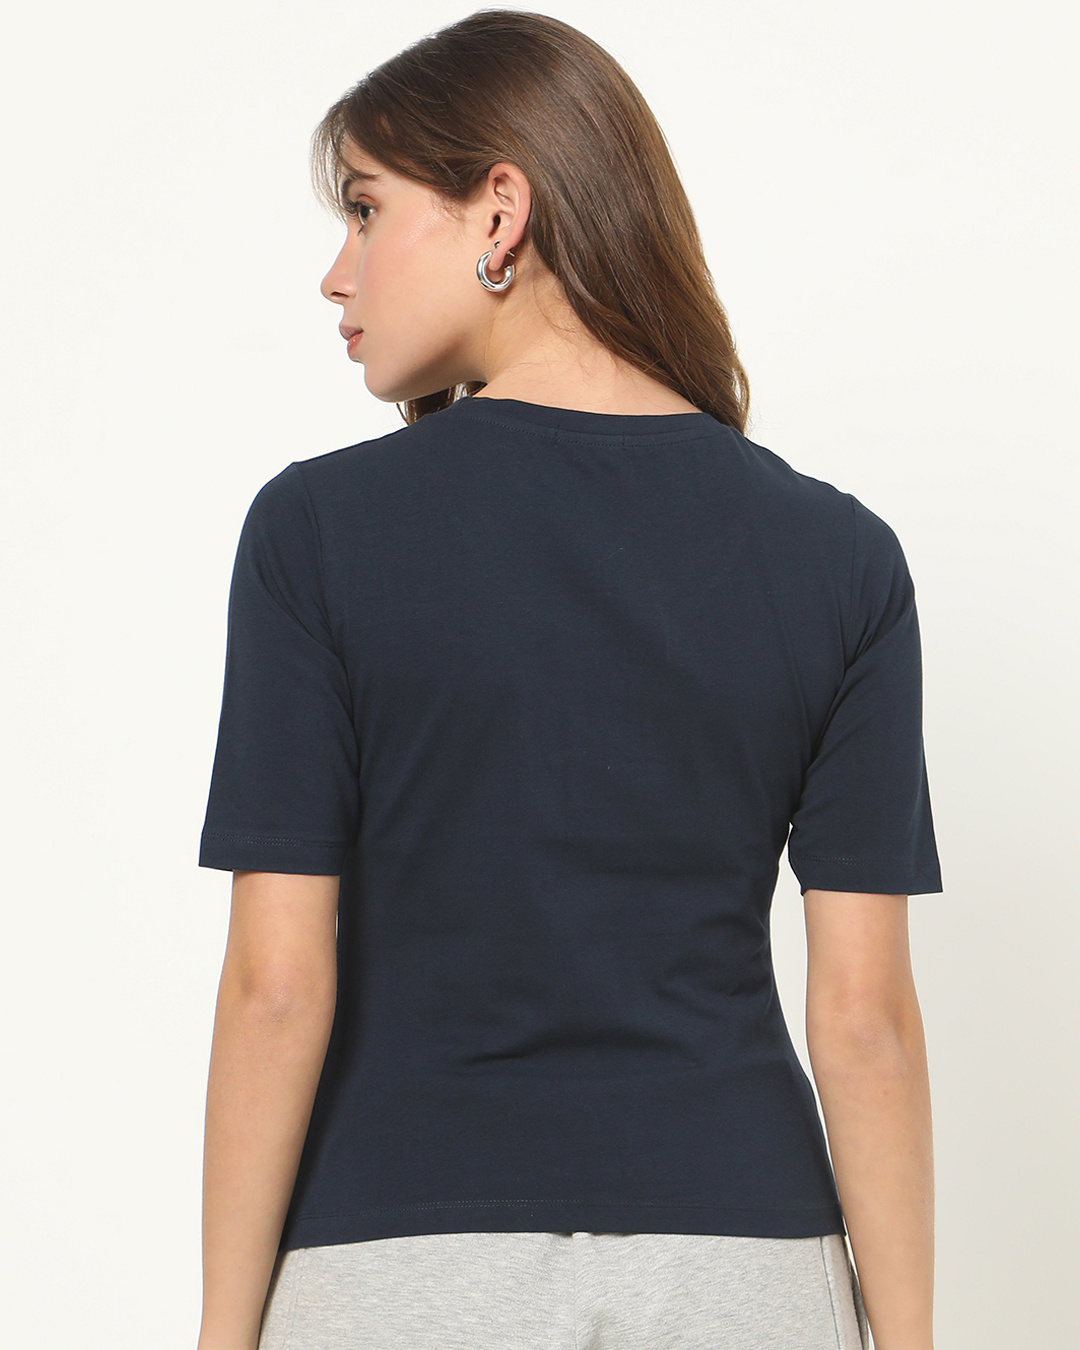 Shop Friends logo (FRL) Women's Elbow Sleeve Round Neck T-shirt-Back